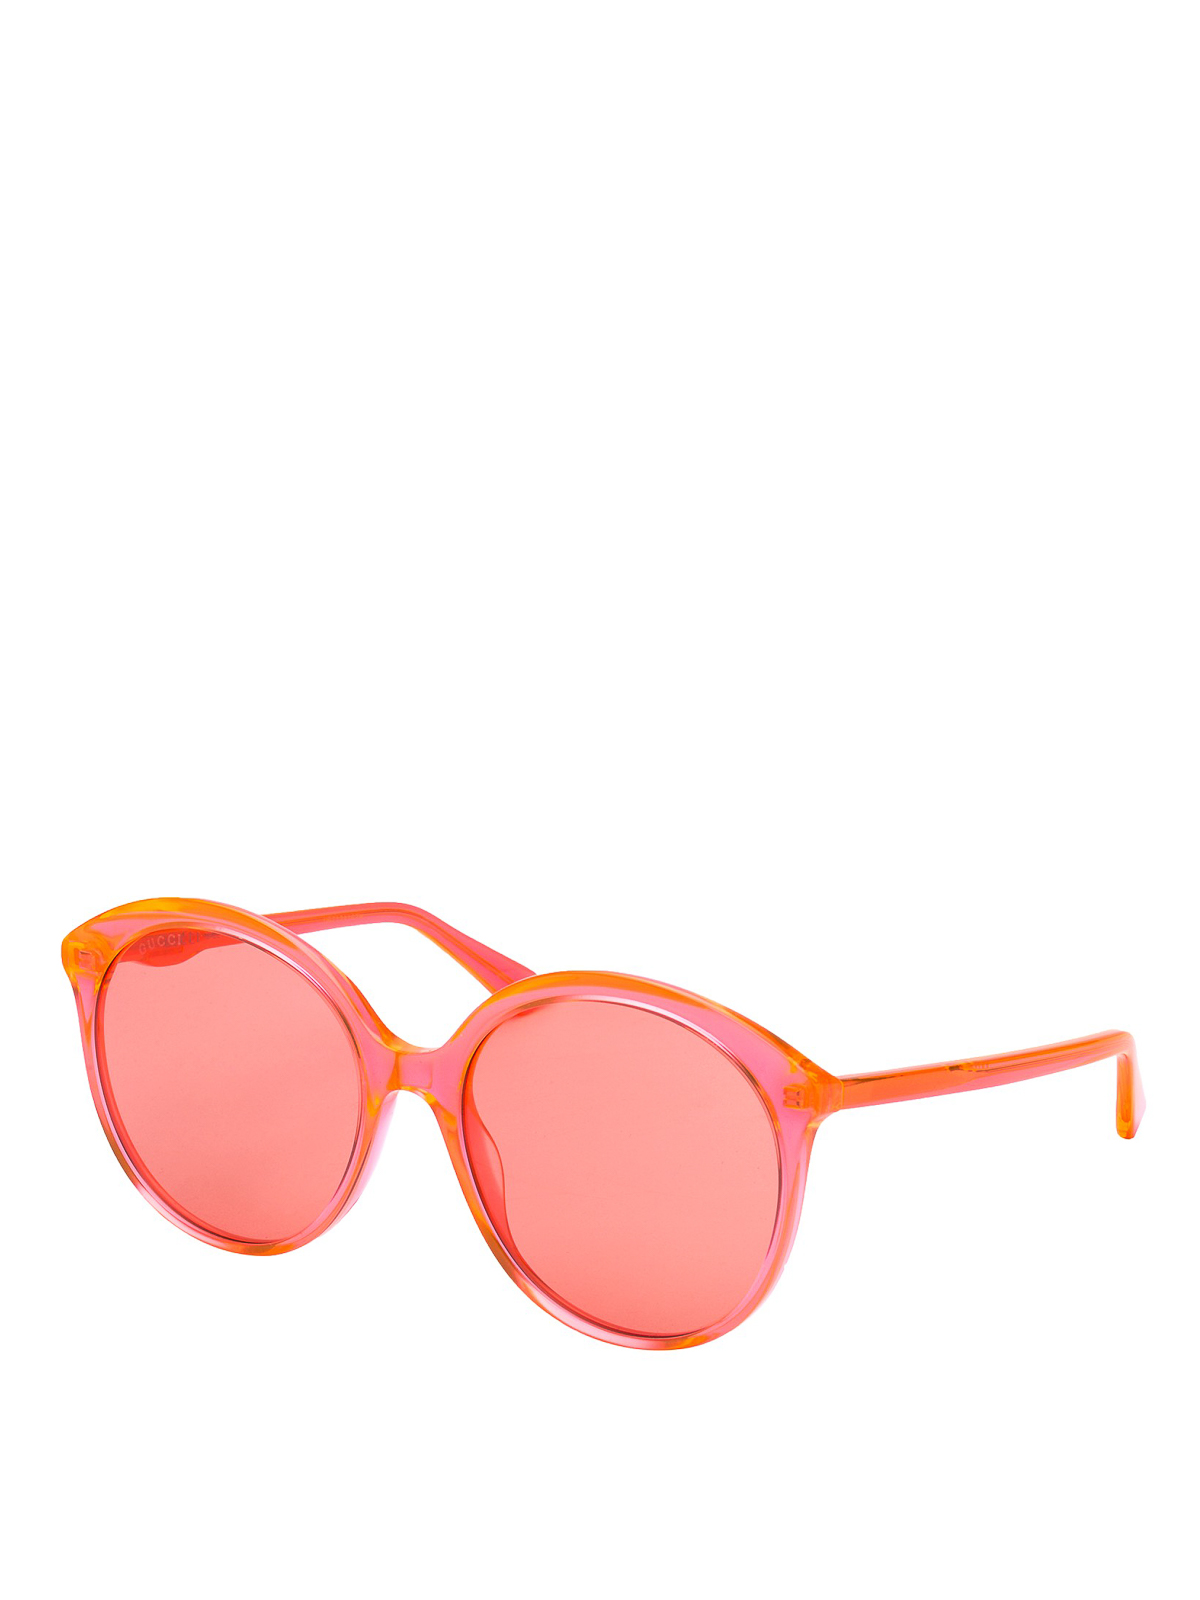 gucci pink round sunglasses